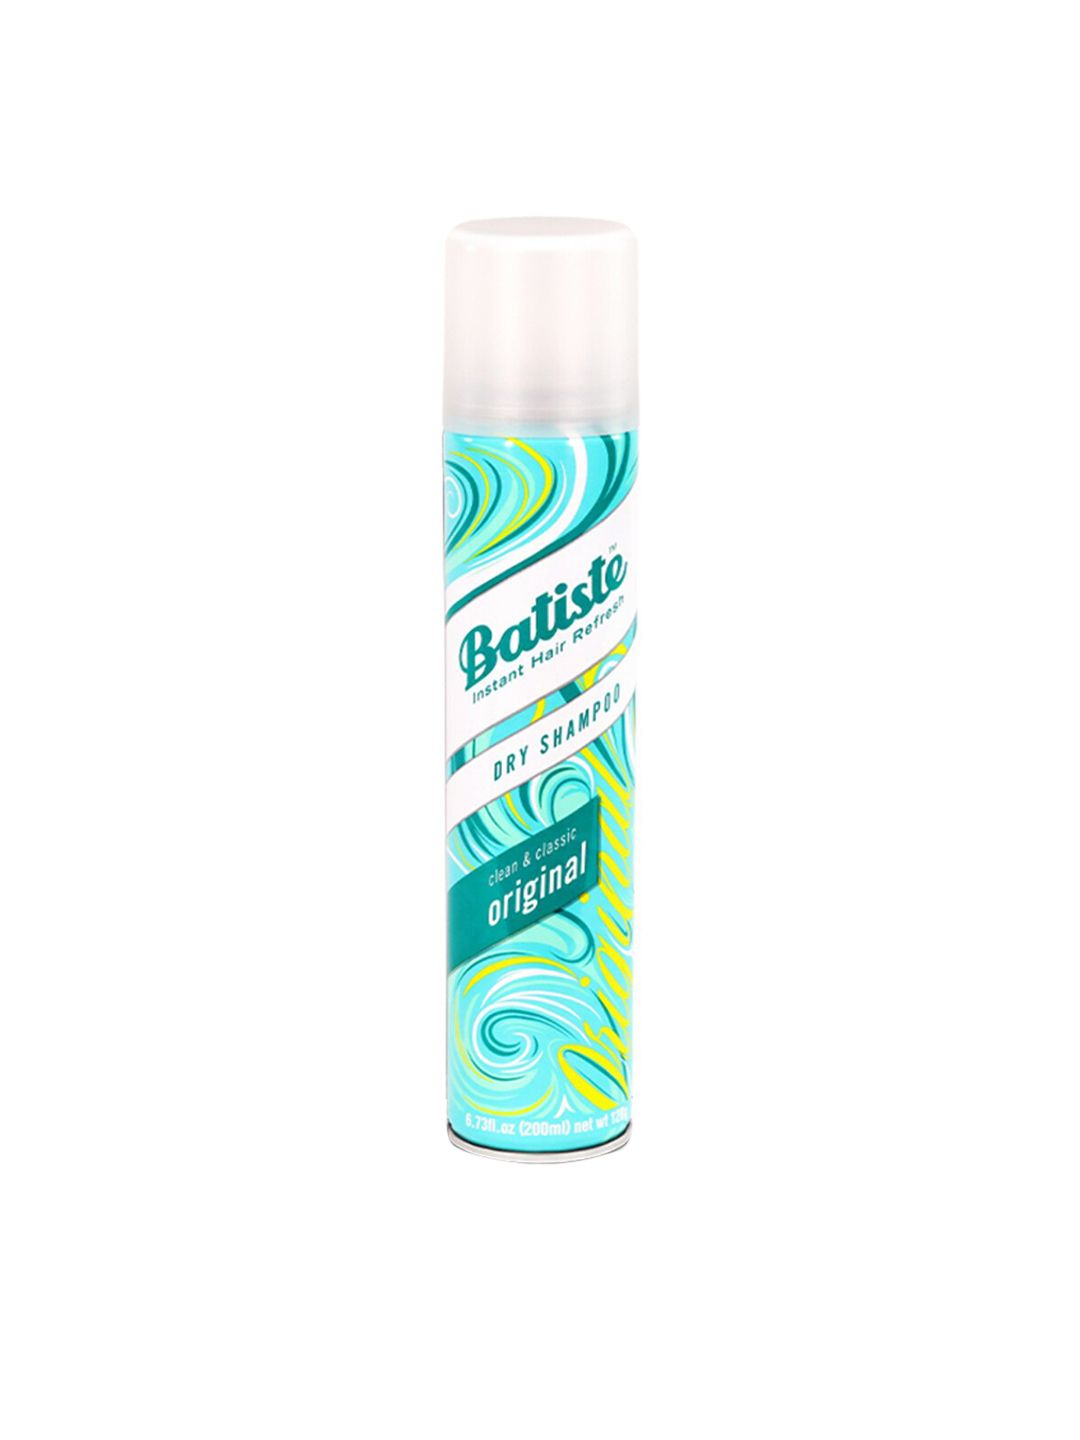 Batiste Instant Hair Refresh Clean & Classic Original Dry Shampoo - 200 ml Price in India